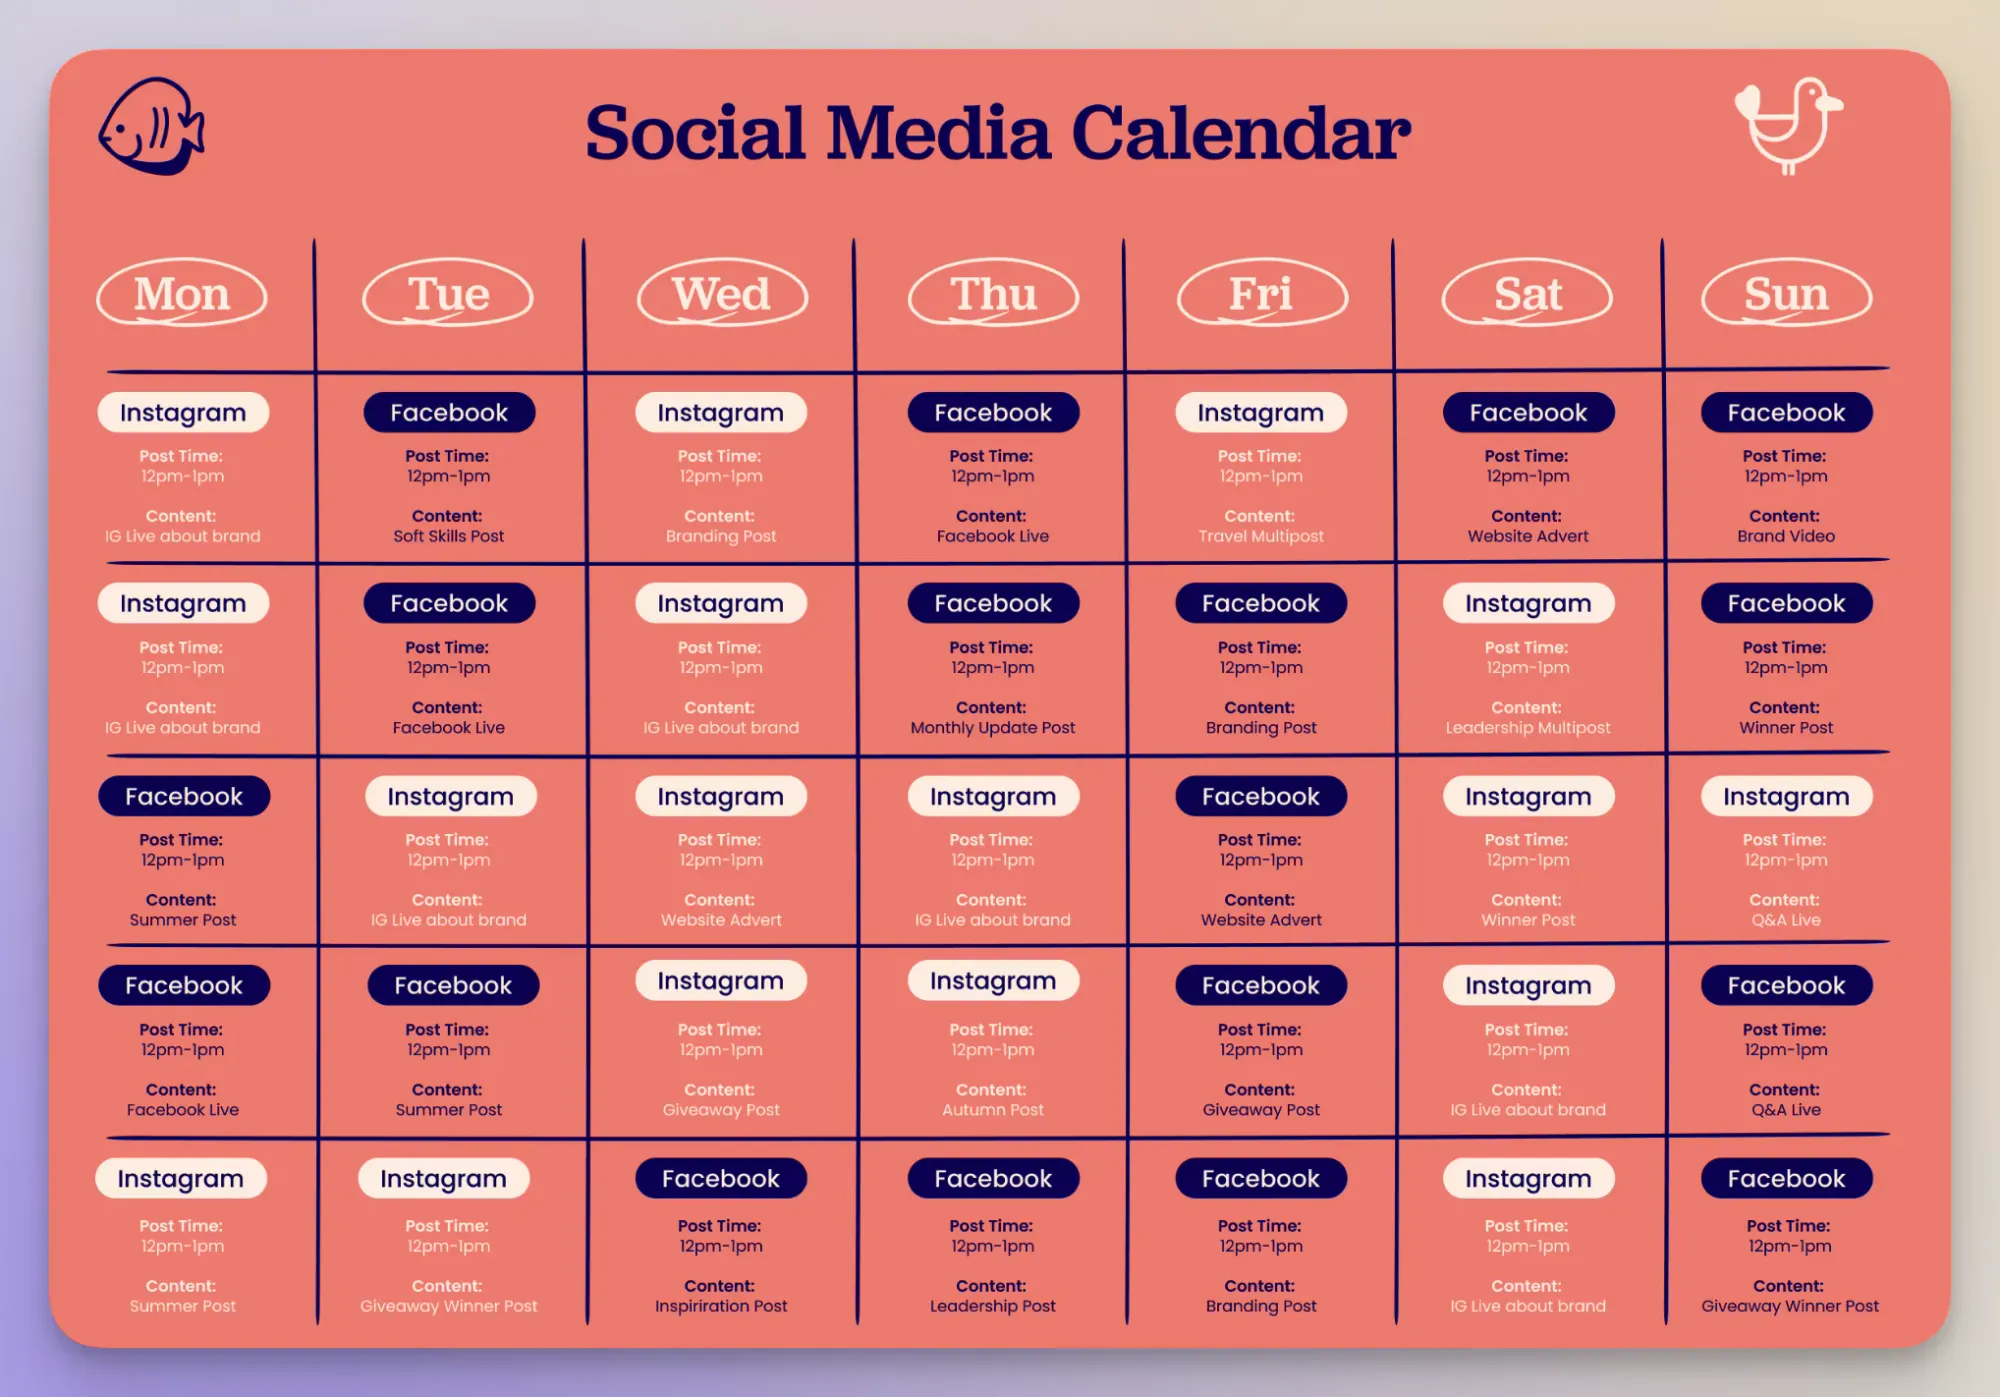 social media content calendar example